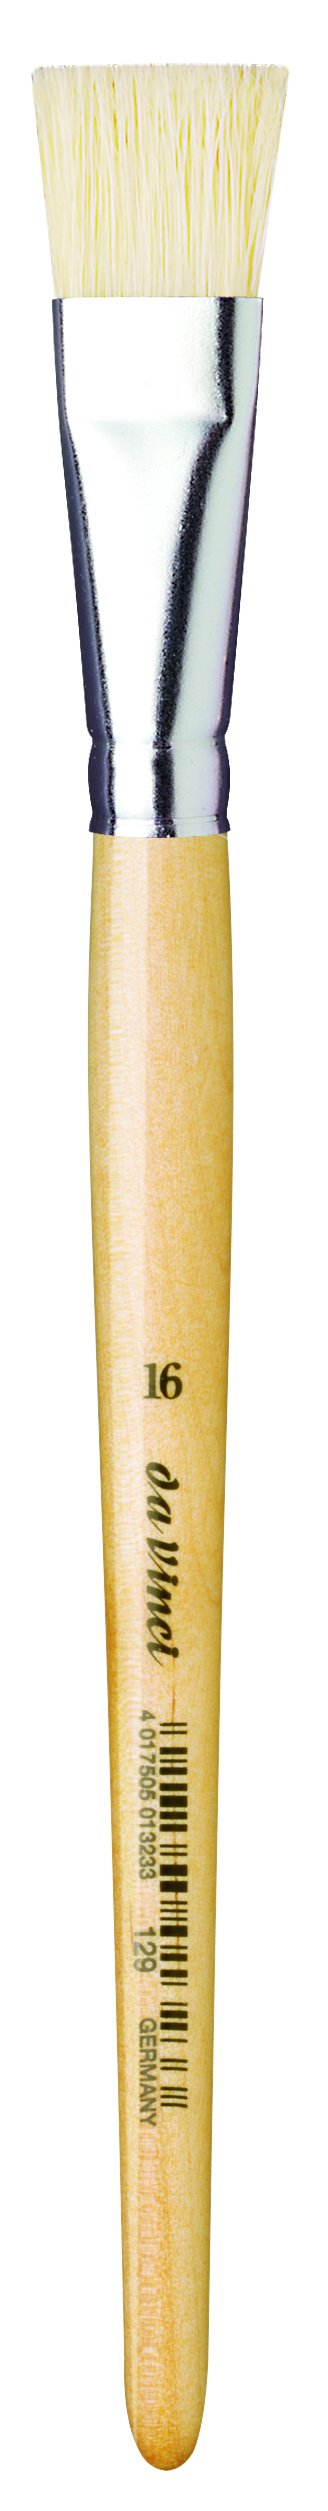 Pennelli Da Vinci Junior borste punta piatta setola sintetica n.16